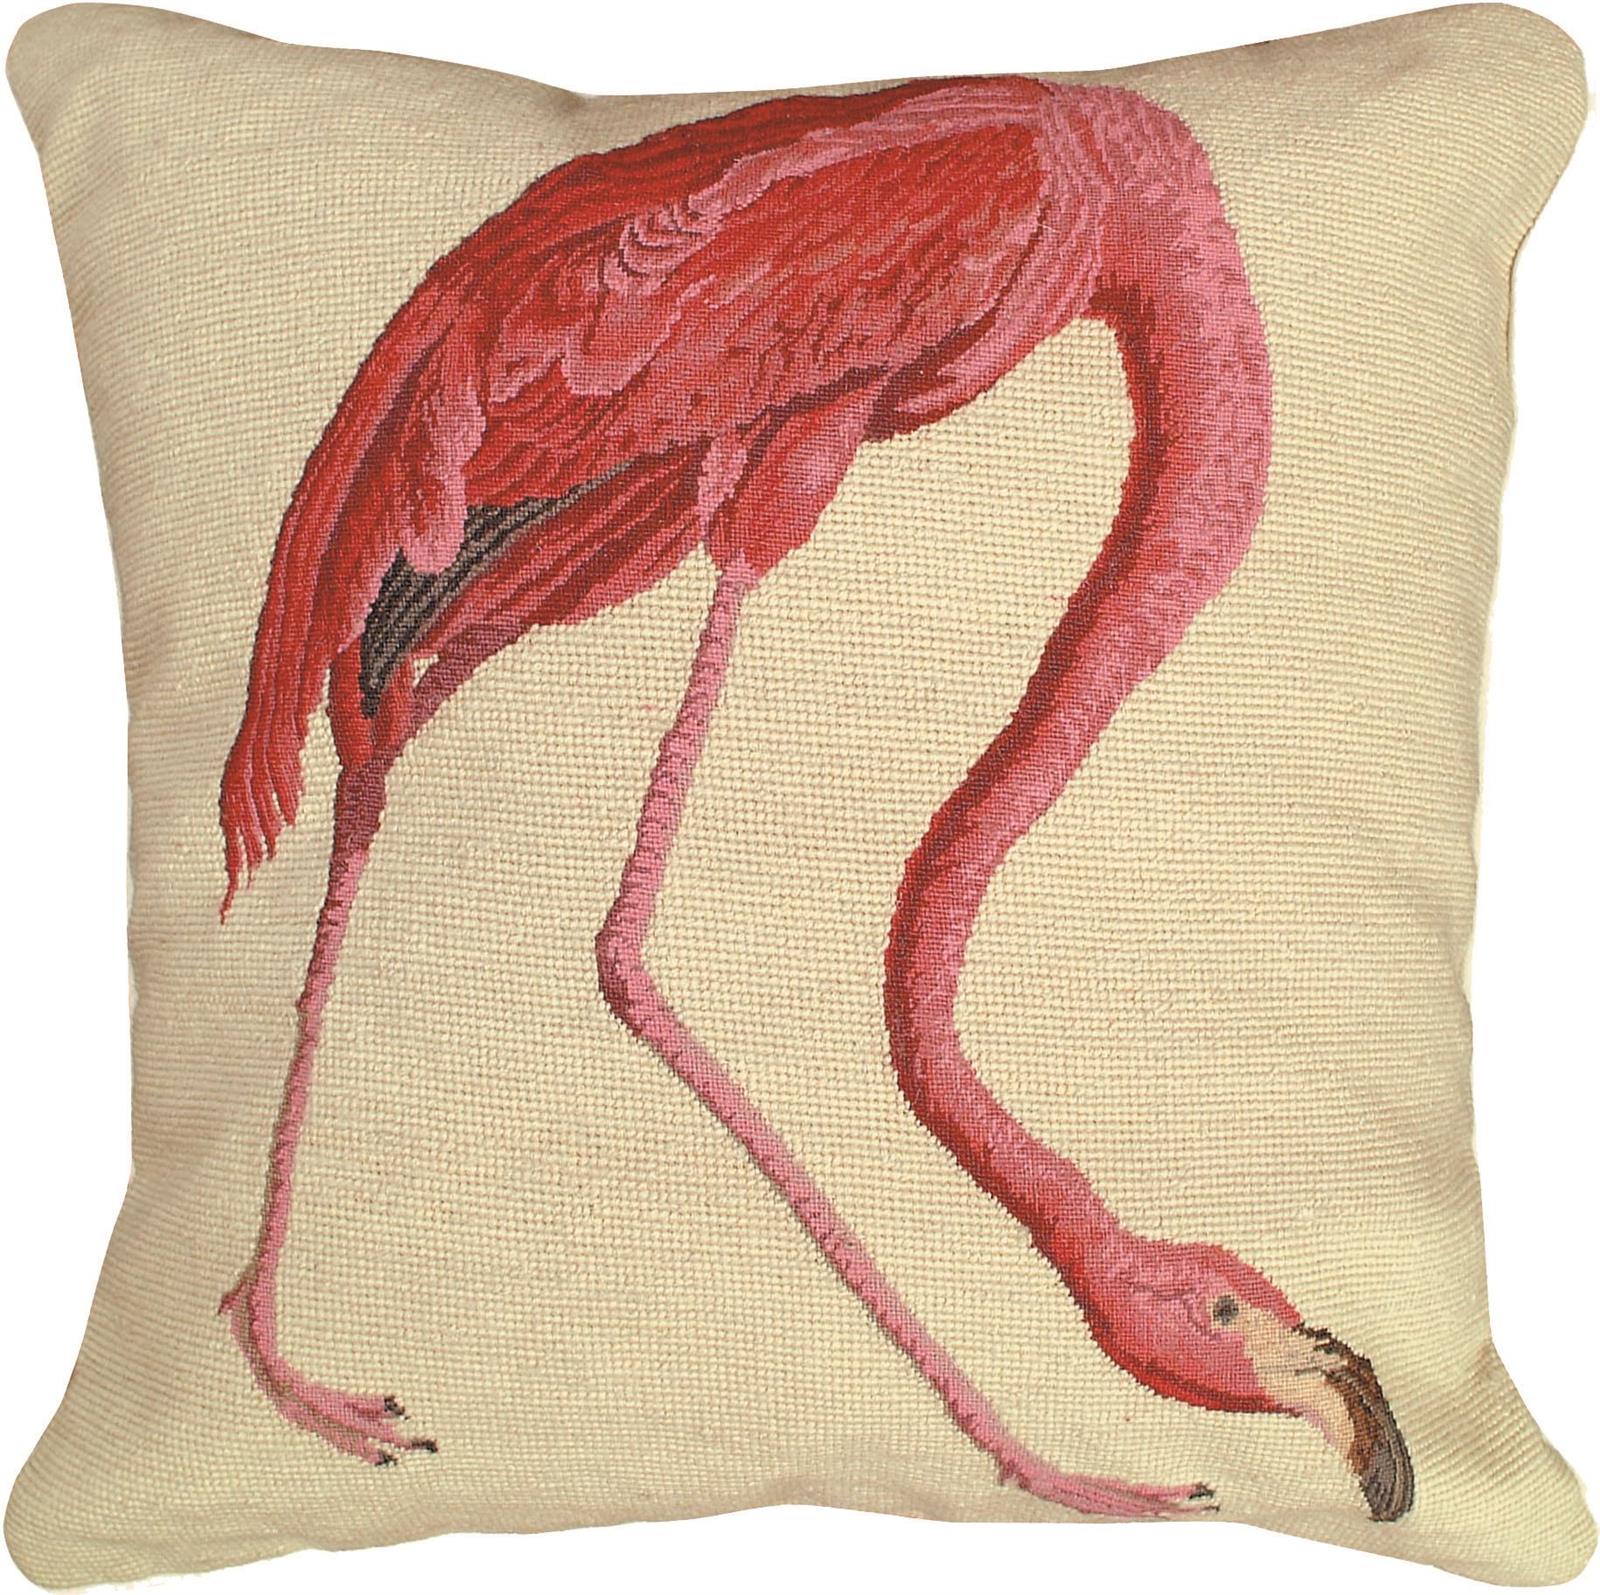 Throw Pillow Needlepoint American Flamingo View 20x20 Down Insert Wool Cotton-Image 1